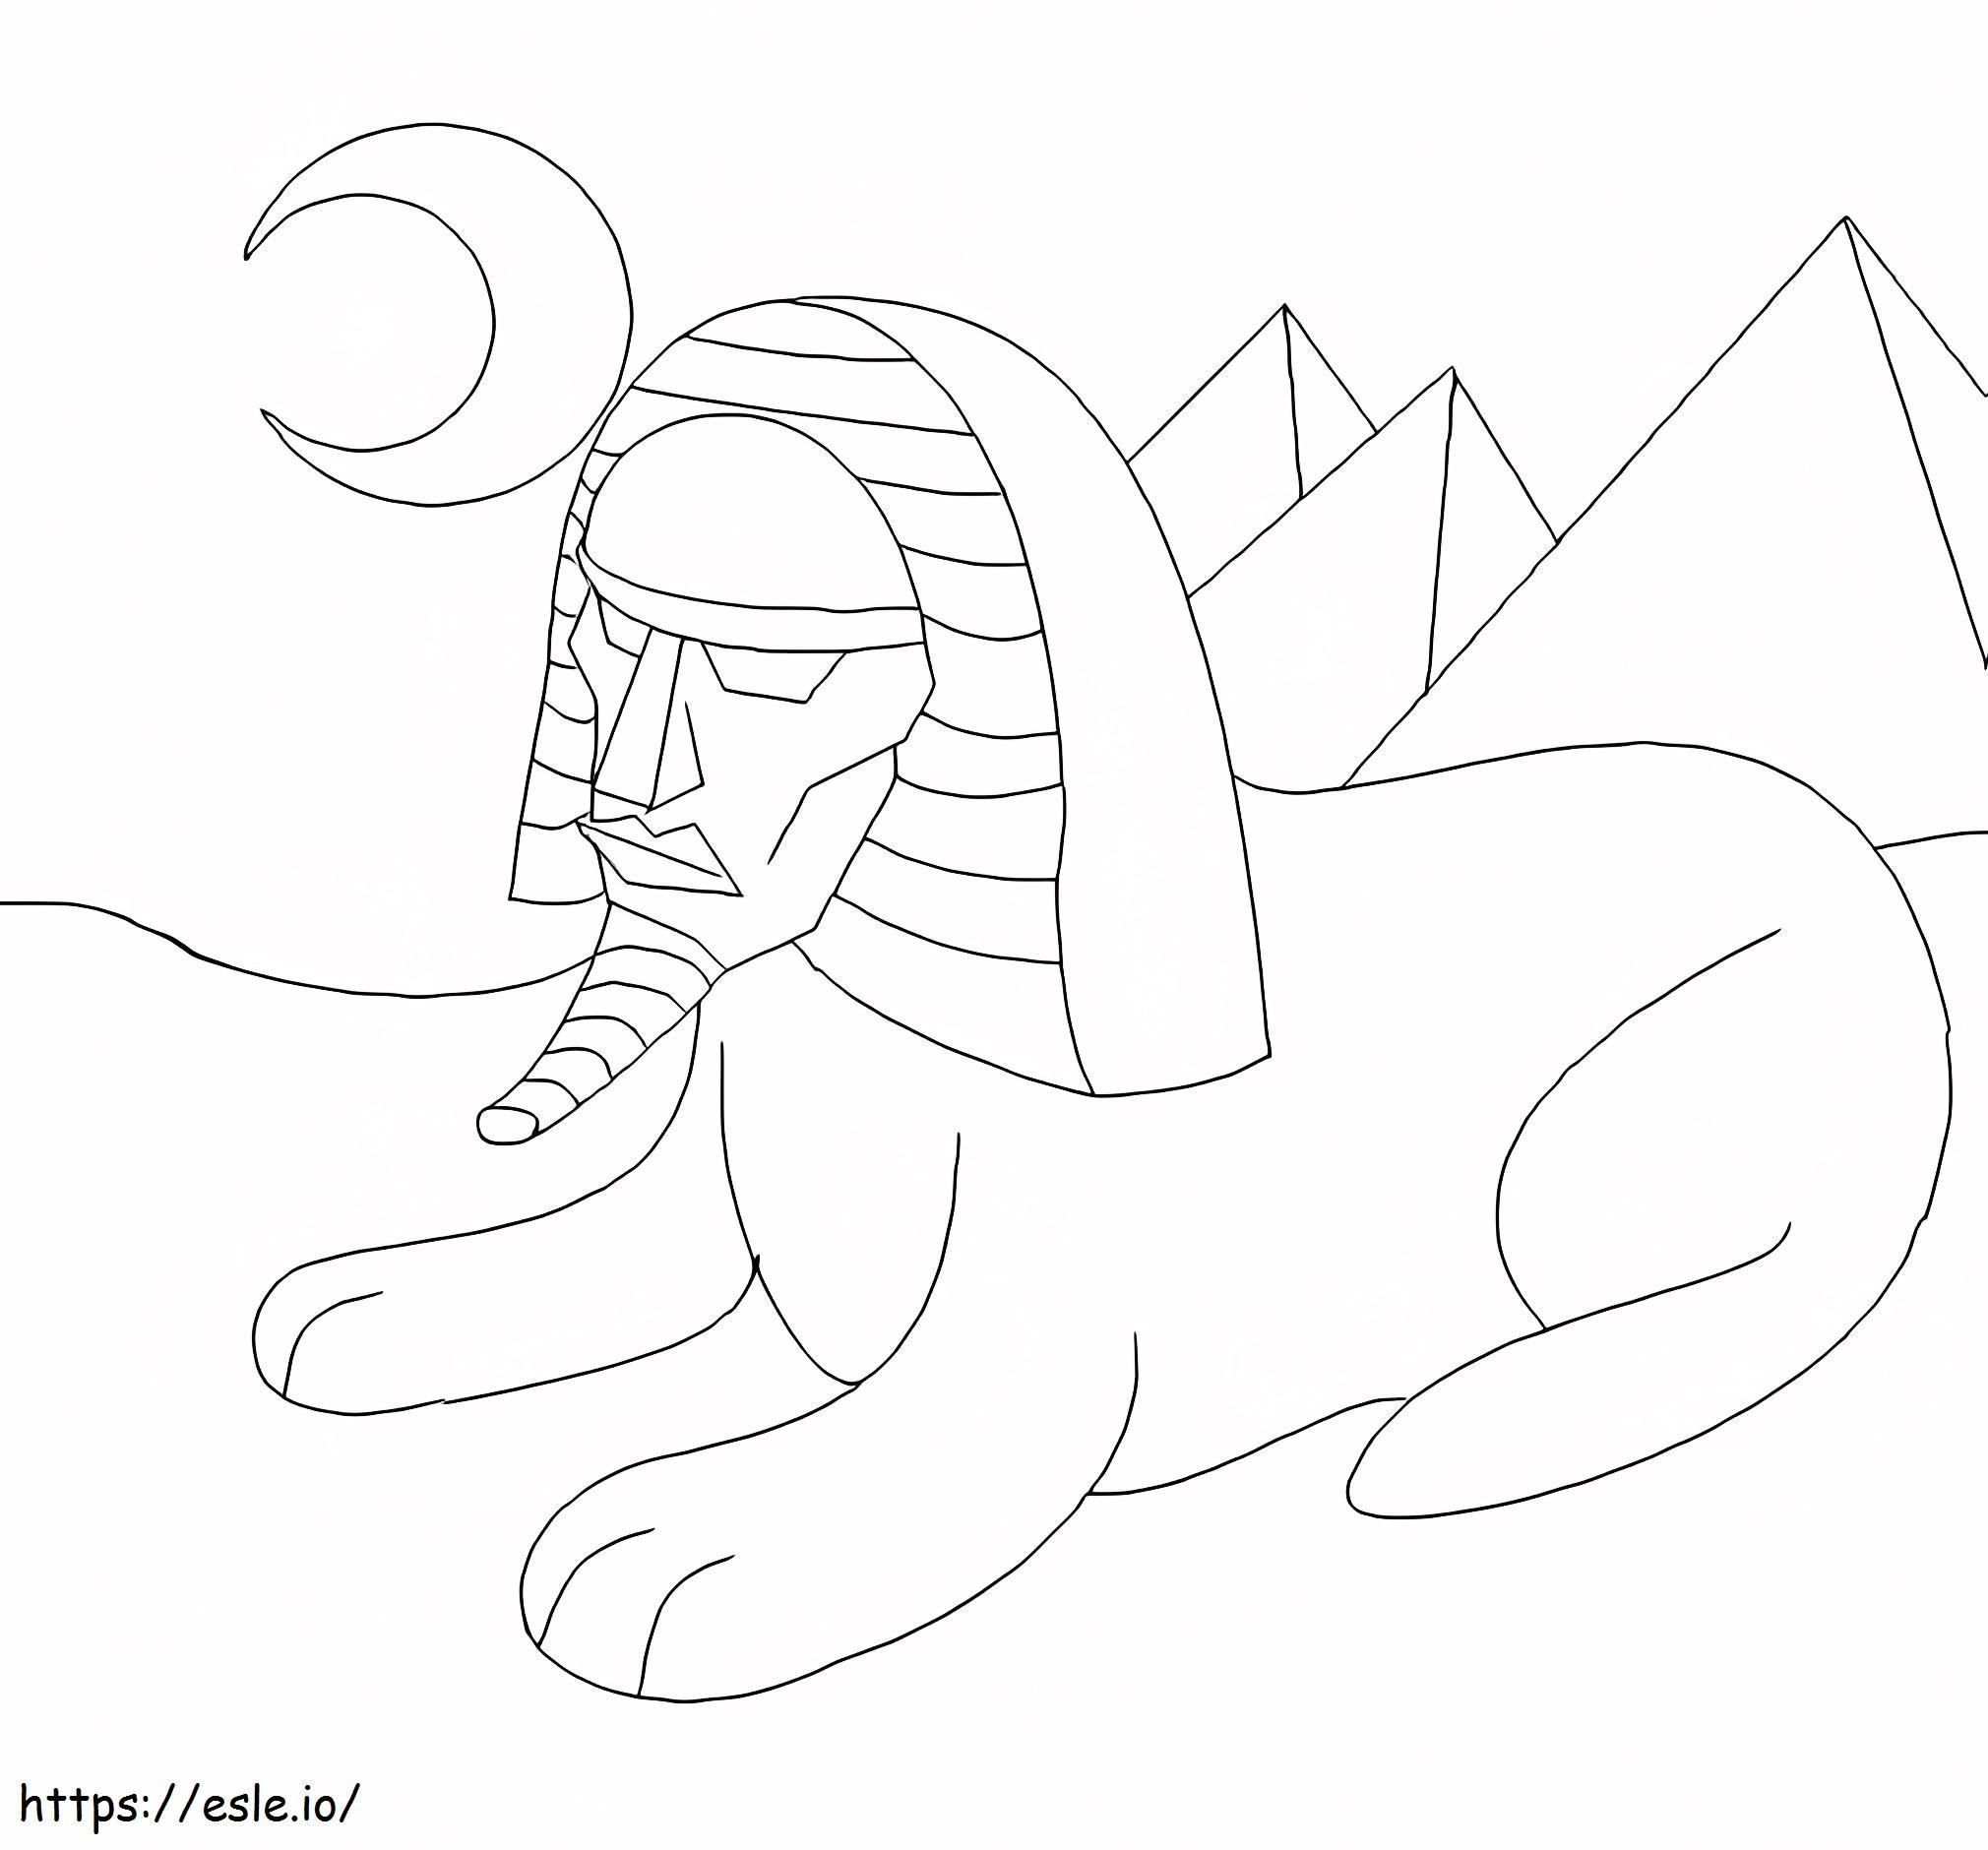 Coloriage Sphinx 3 à imprimer dessin